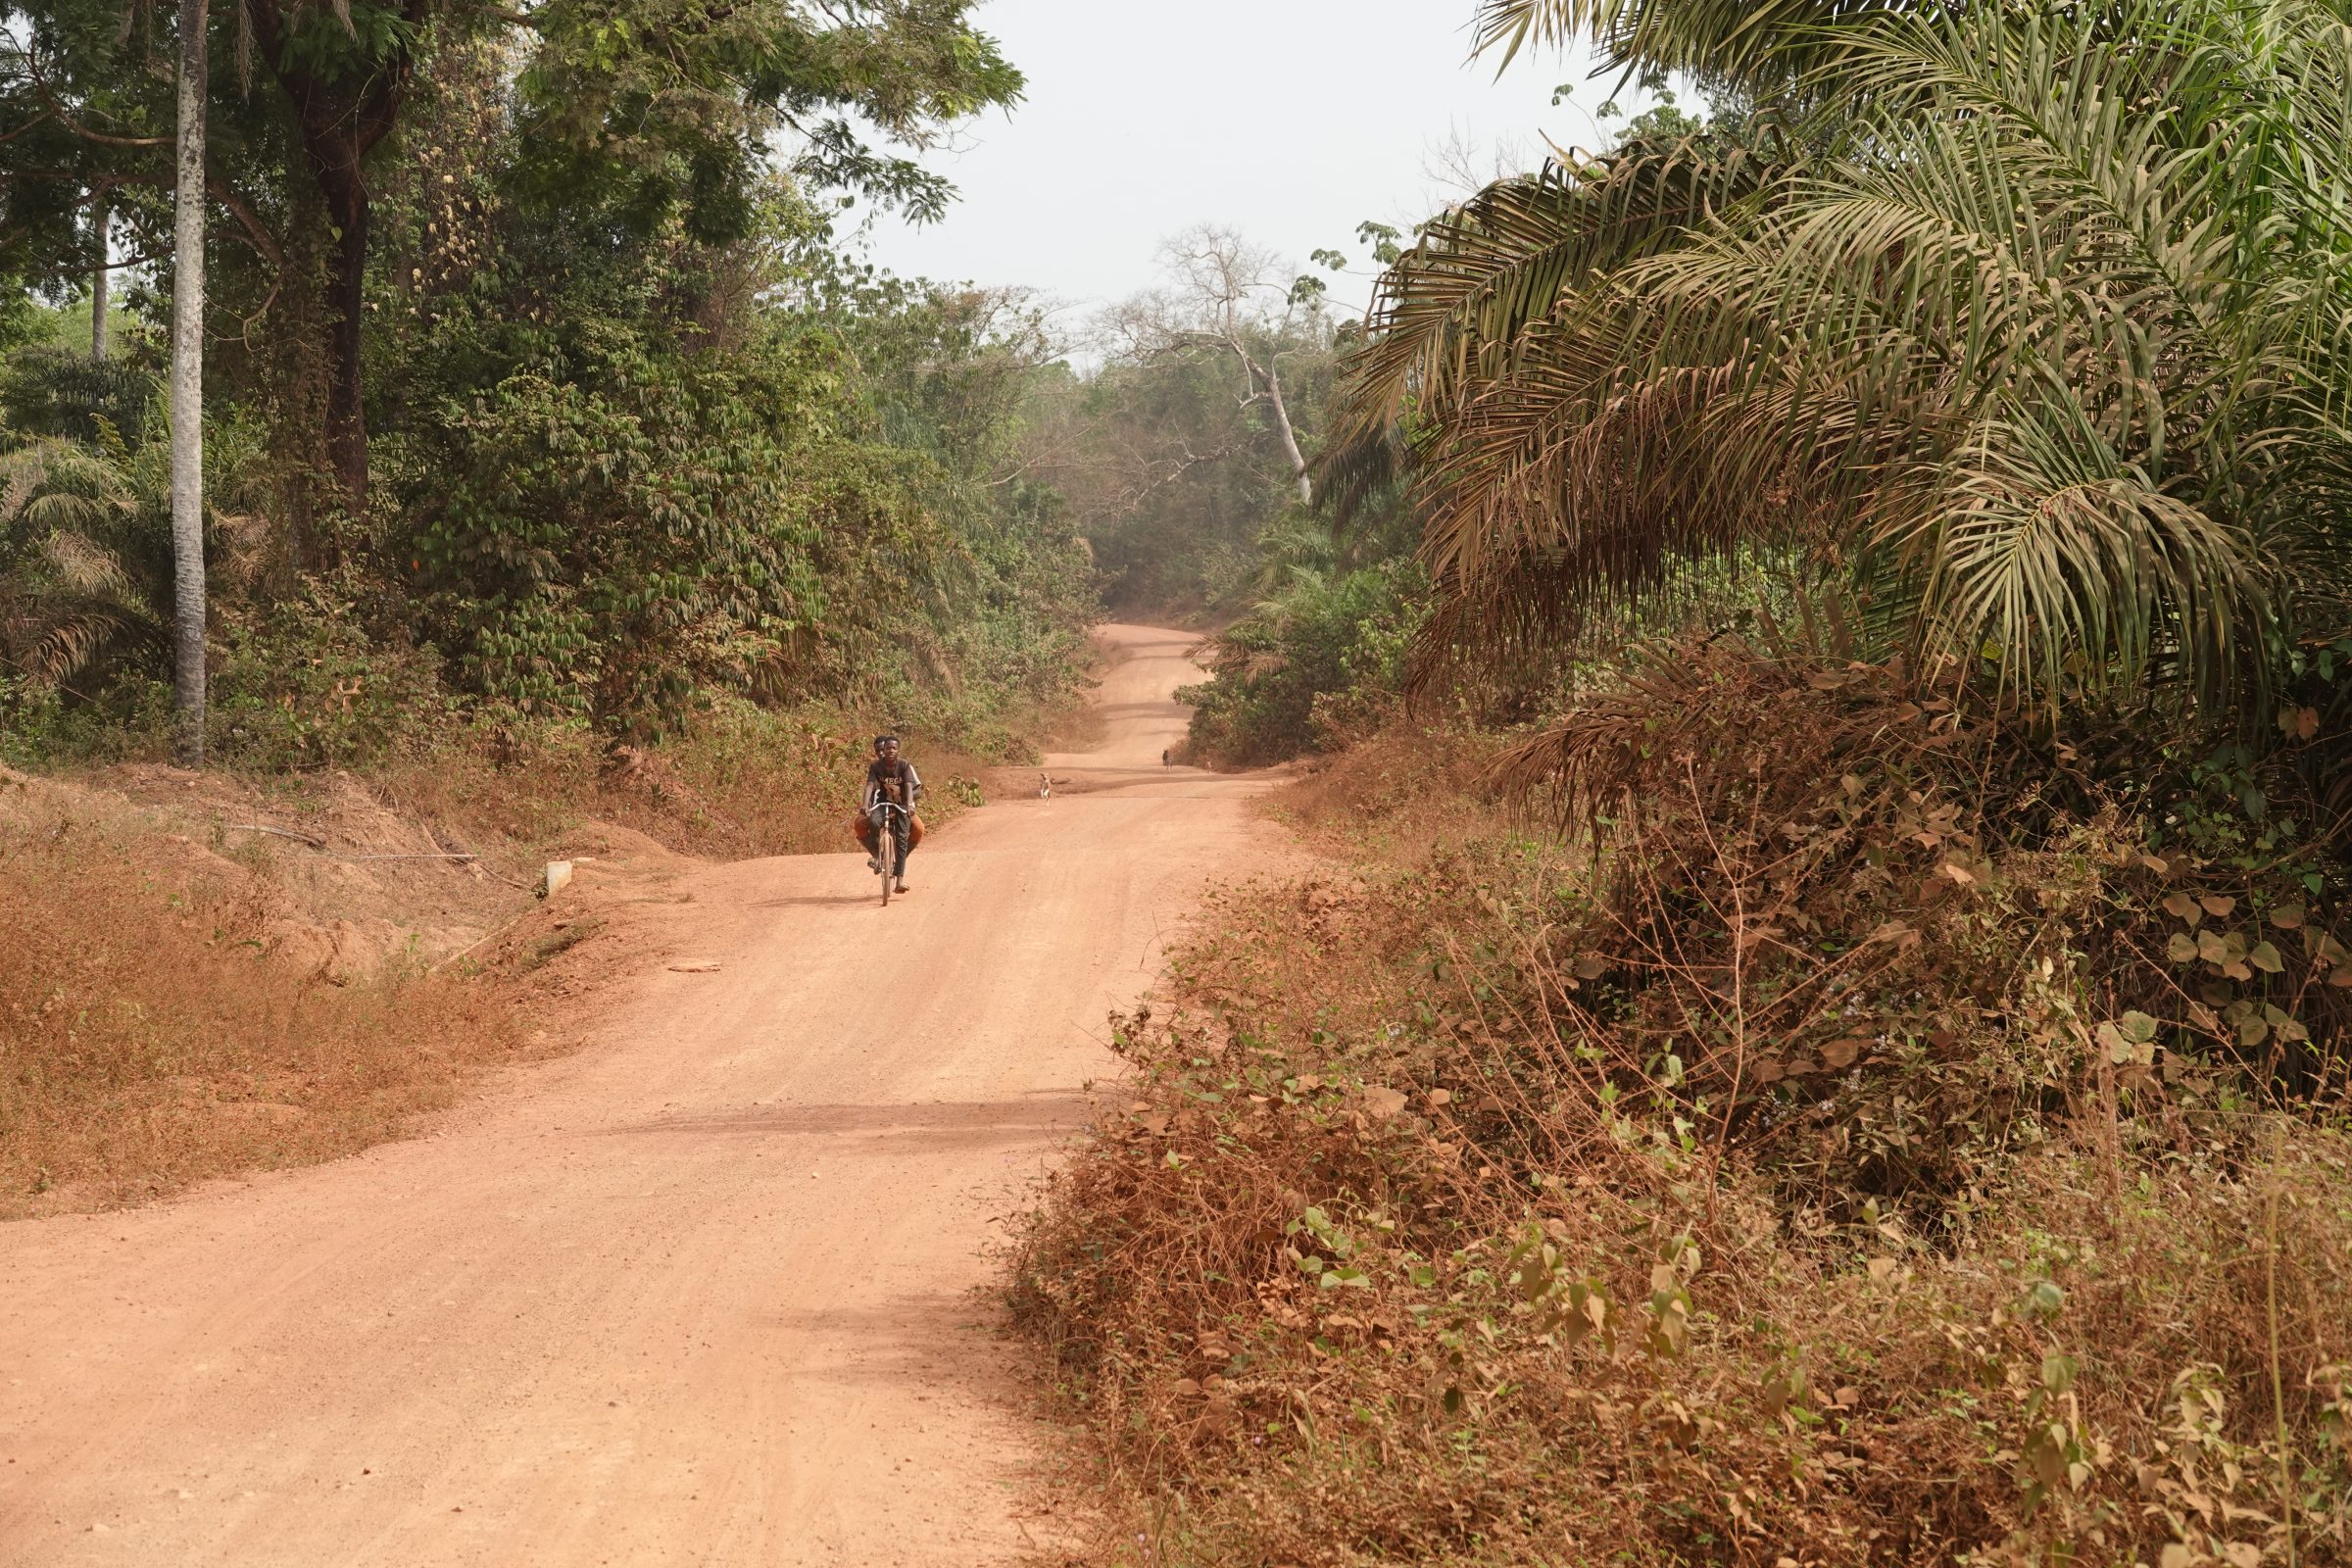 Route langs National Parc Taï | Overlanden in Ivoorkust